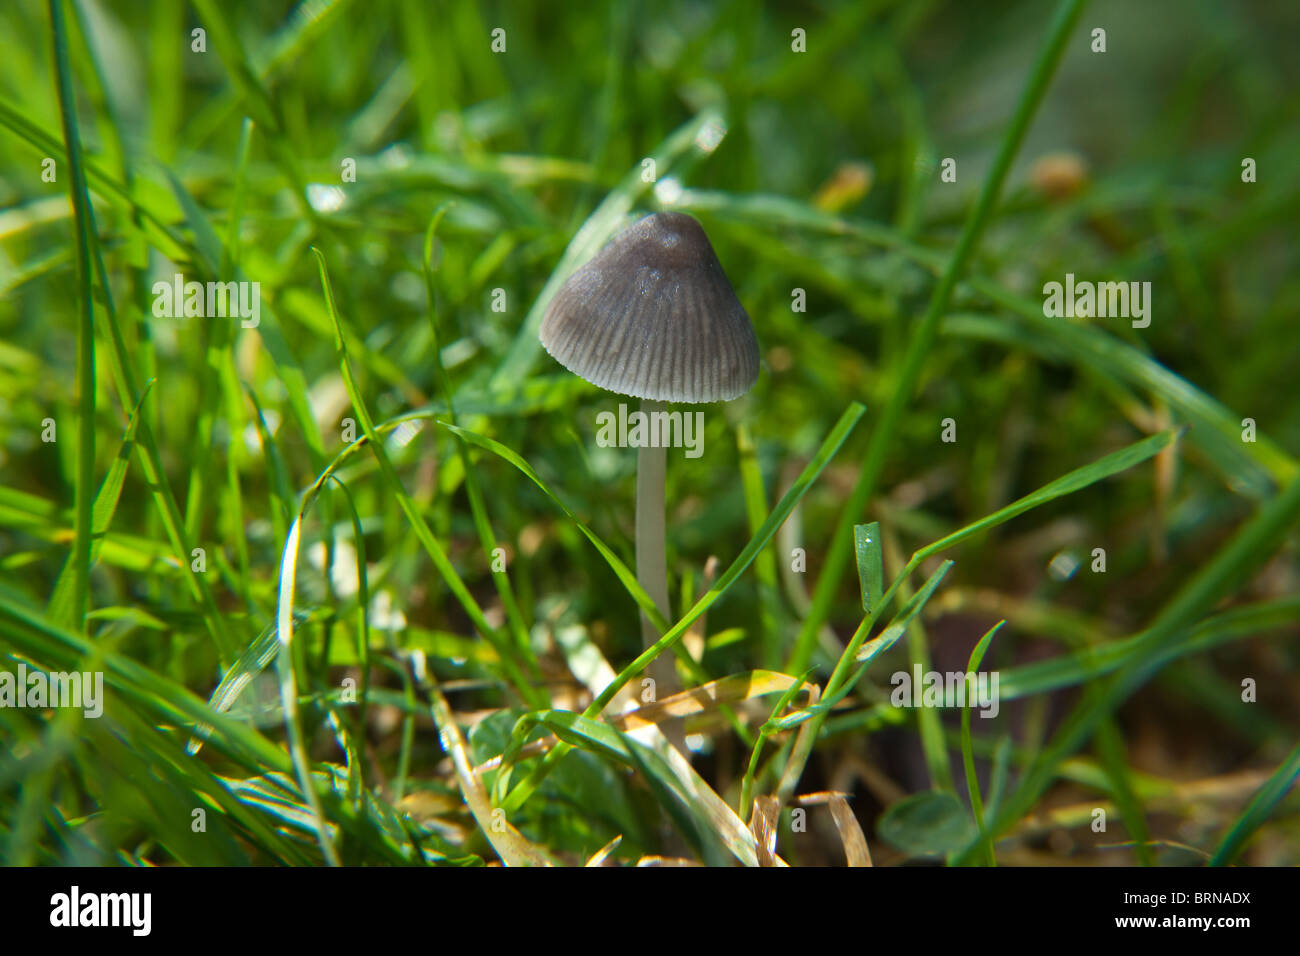 Liberty cap mushrooms hi-res stock photography and images - Alamy